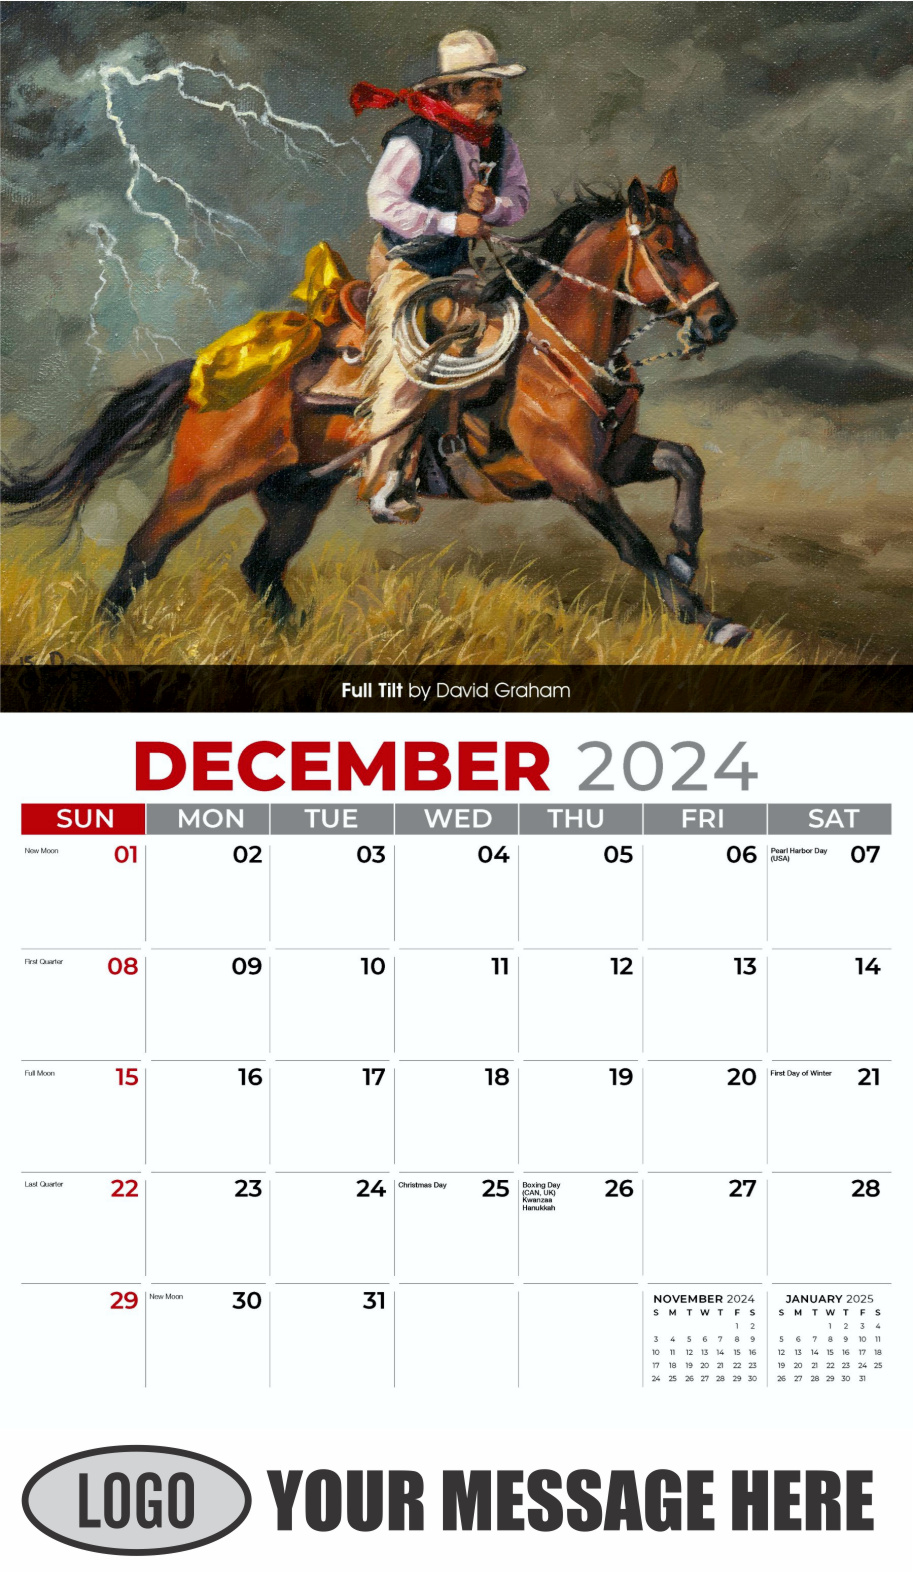 Spirit of the Old West 2024 Old West Art Business Promo Wall Calendar - December